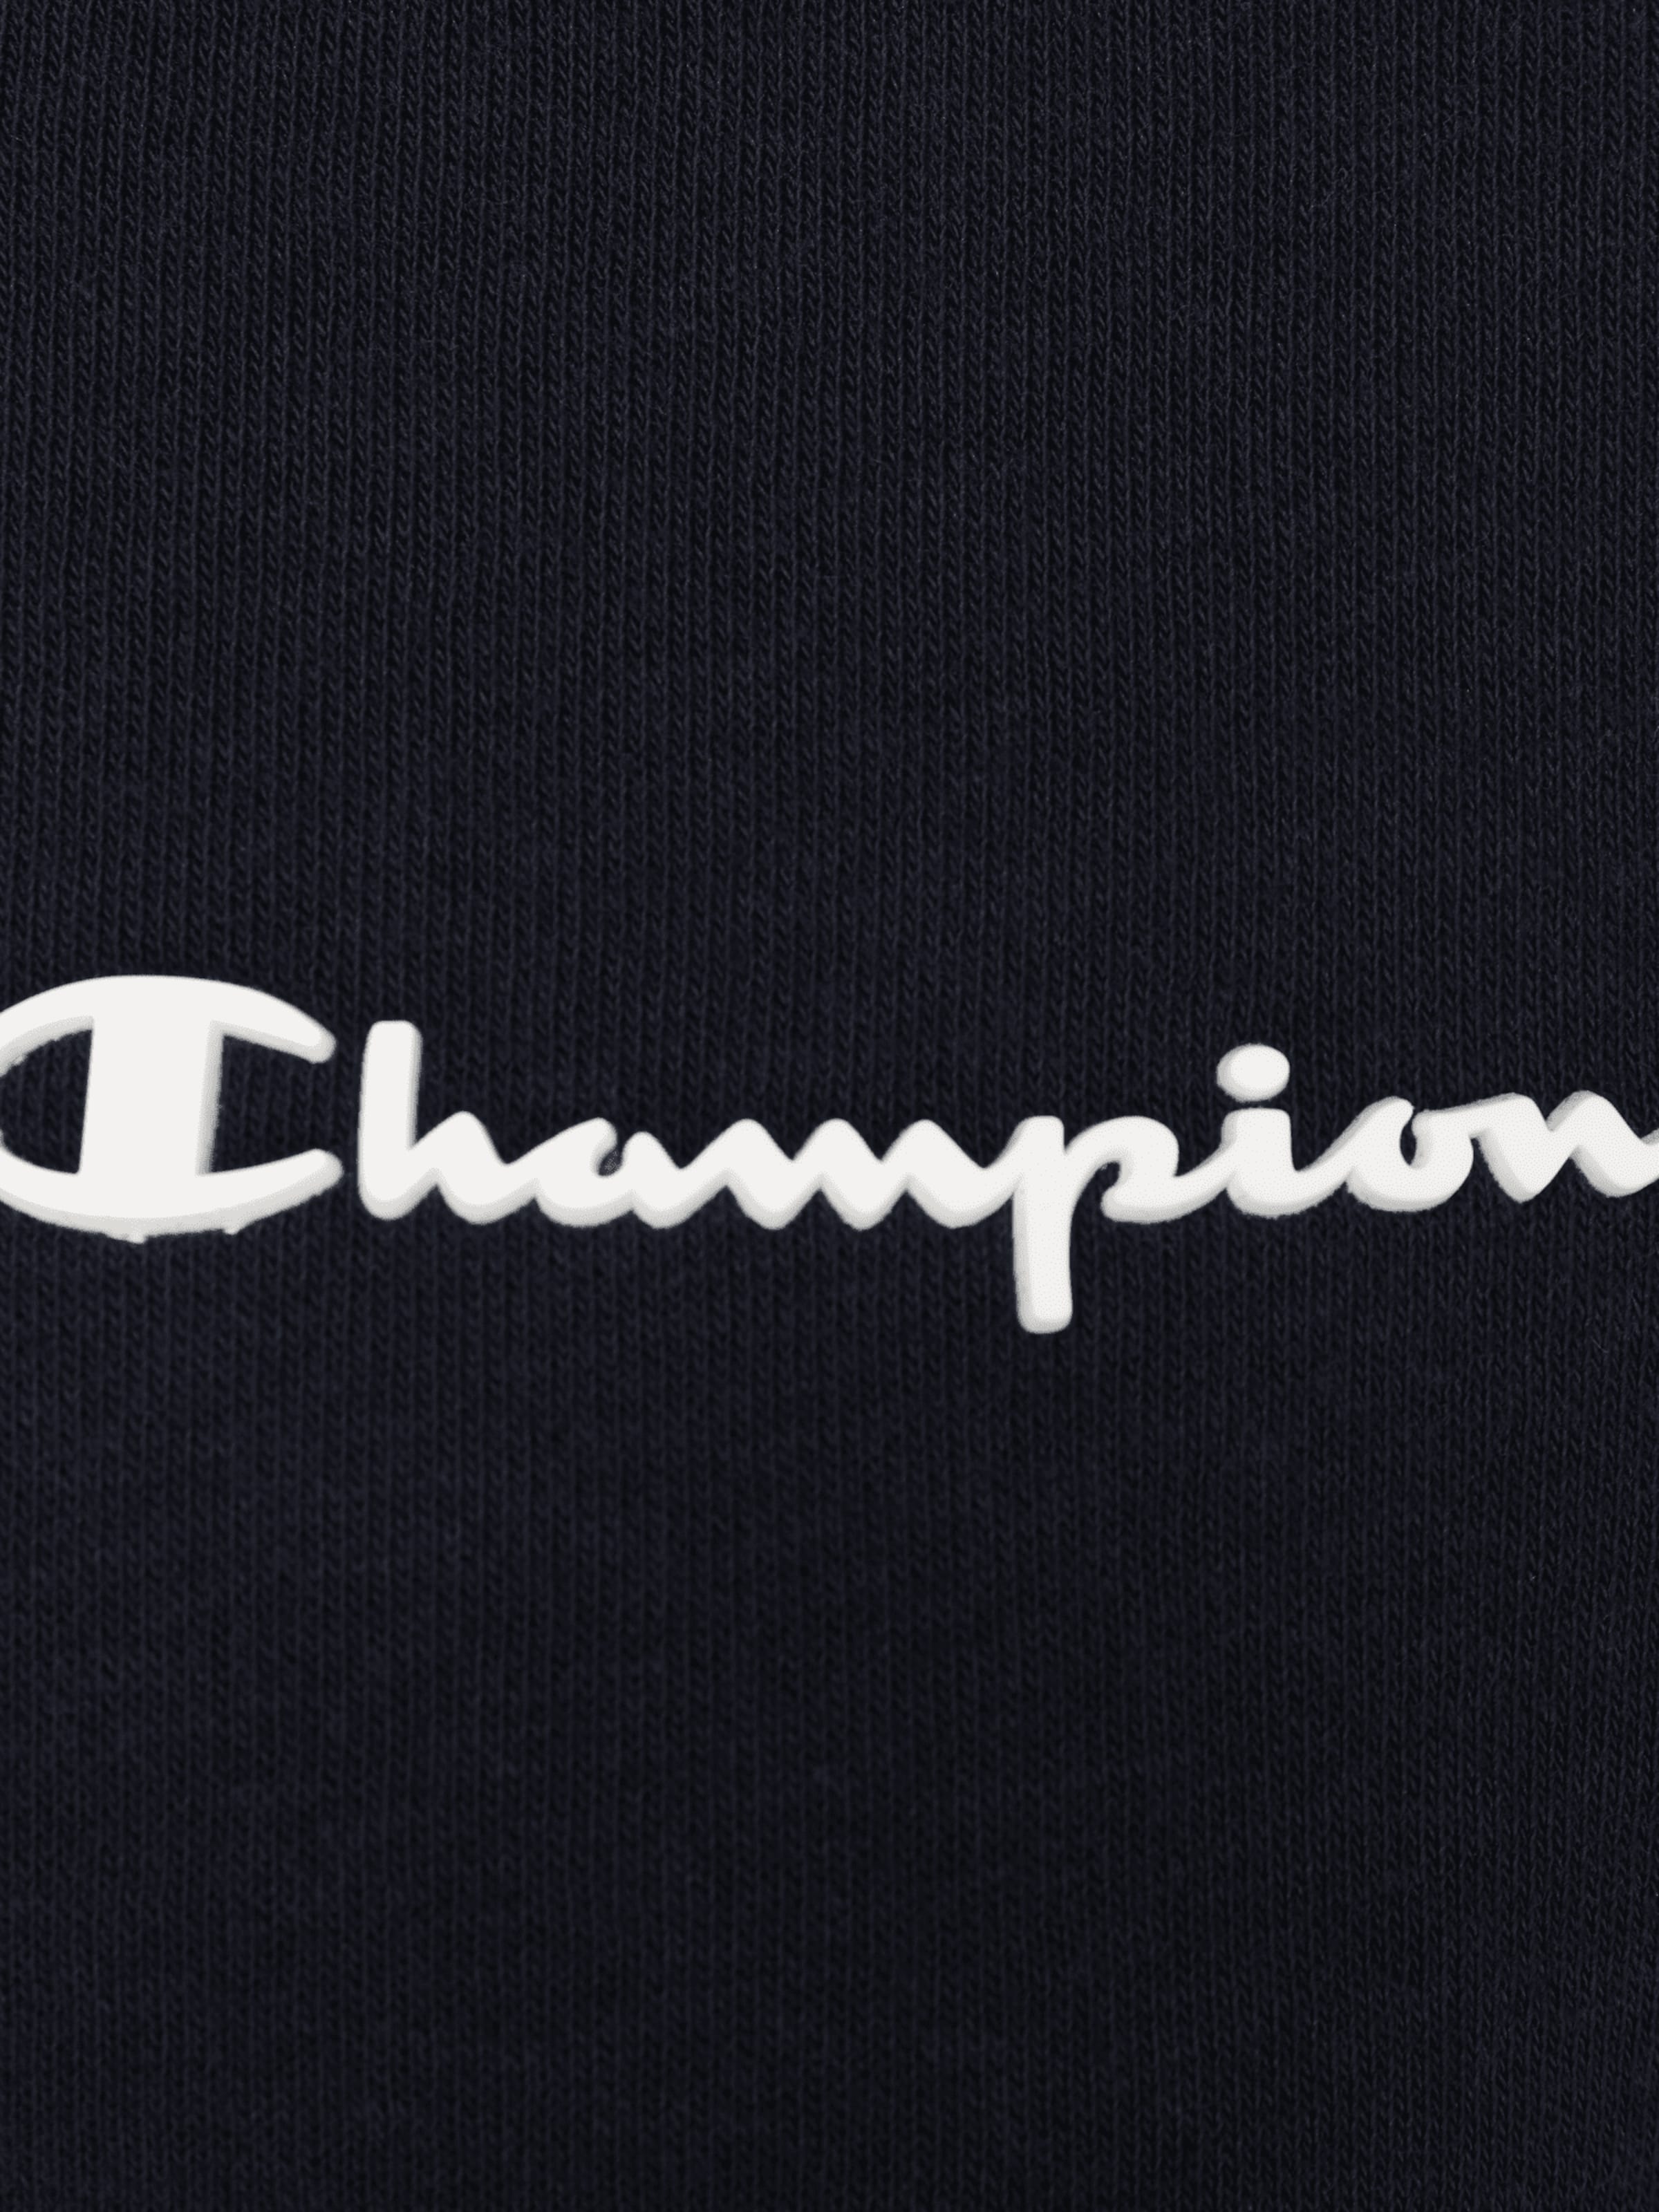 Sweats Sweat-shirt Champion Authentic Athletic Apparel en Bleu Marine 